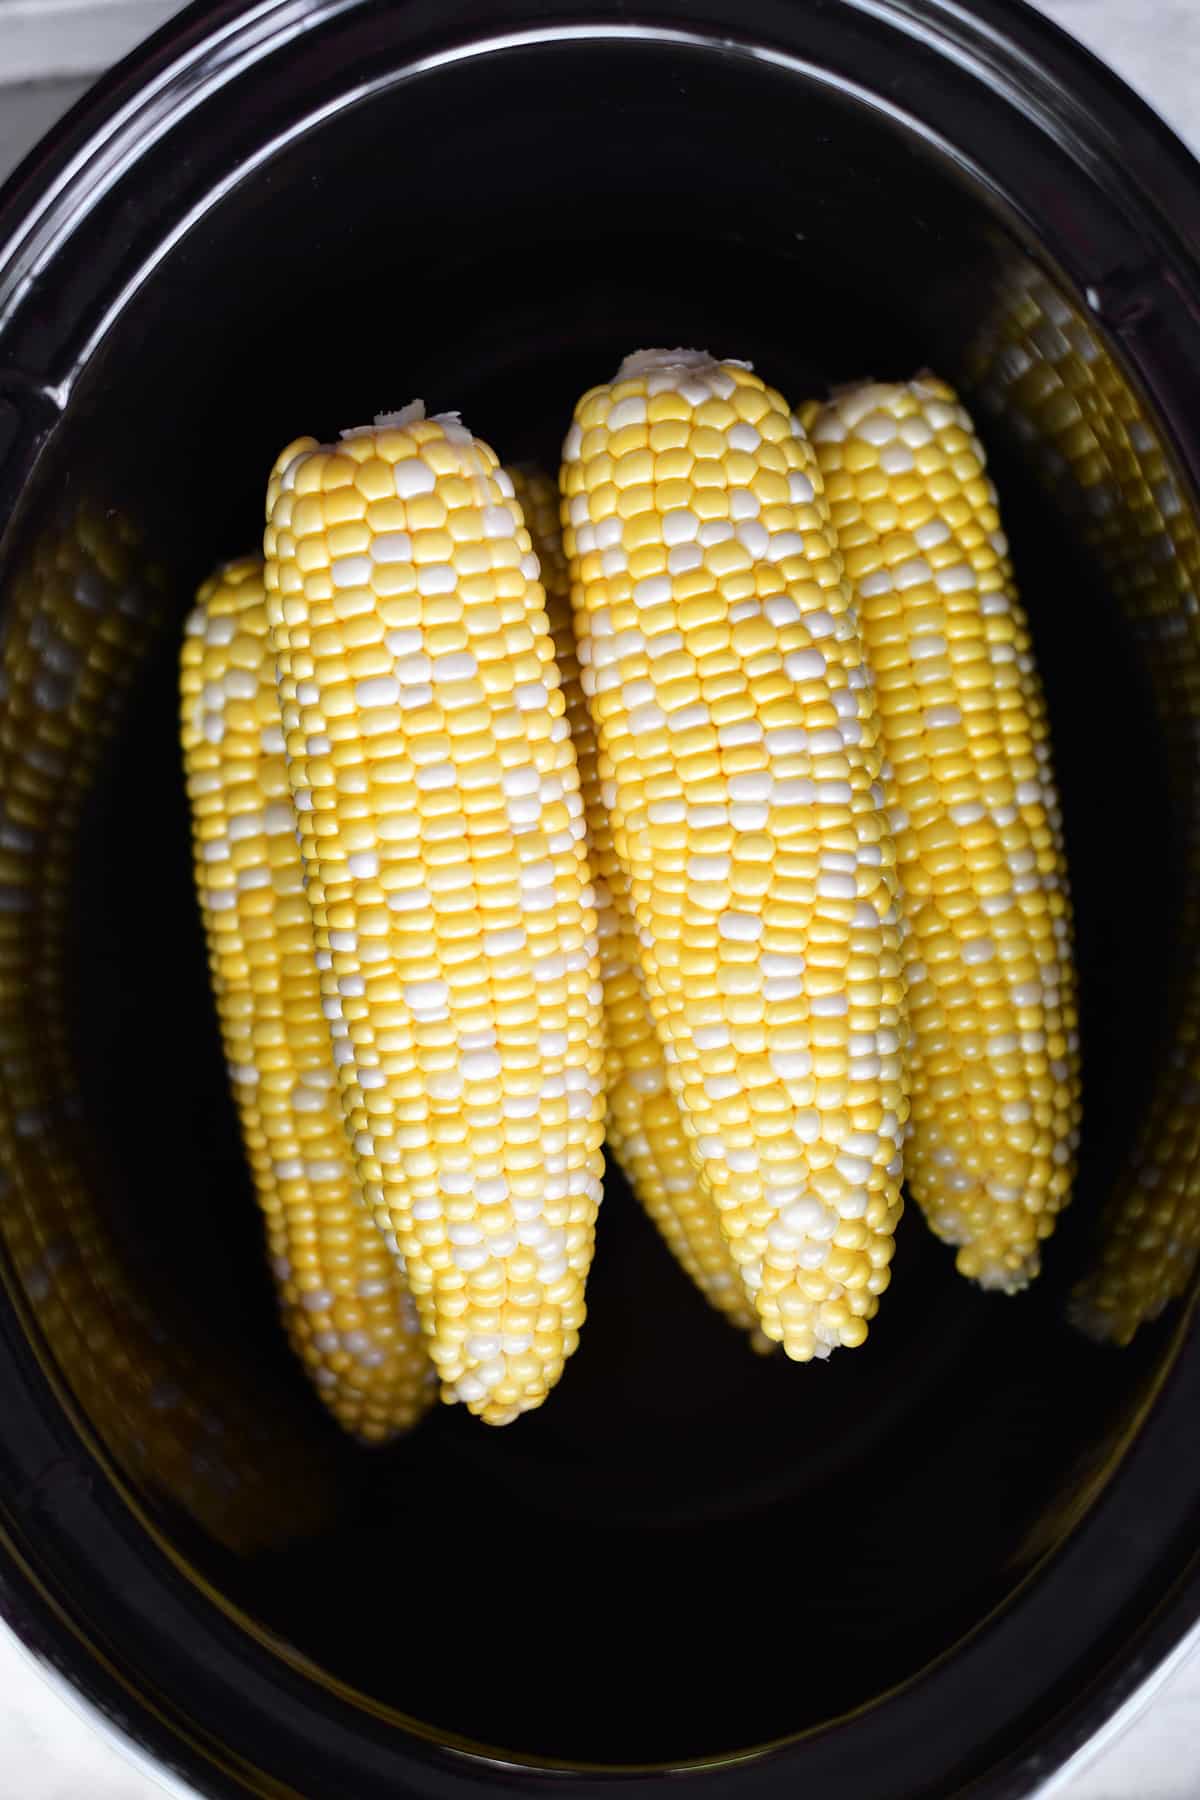 Corn on the cob in a crock pot.